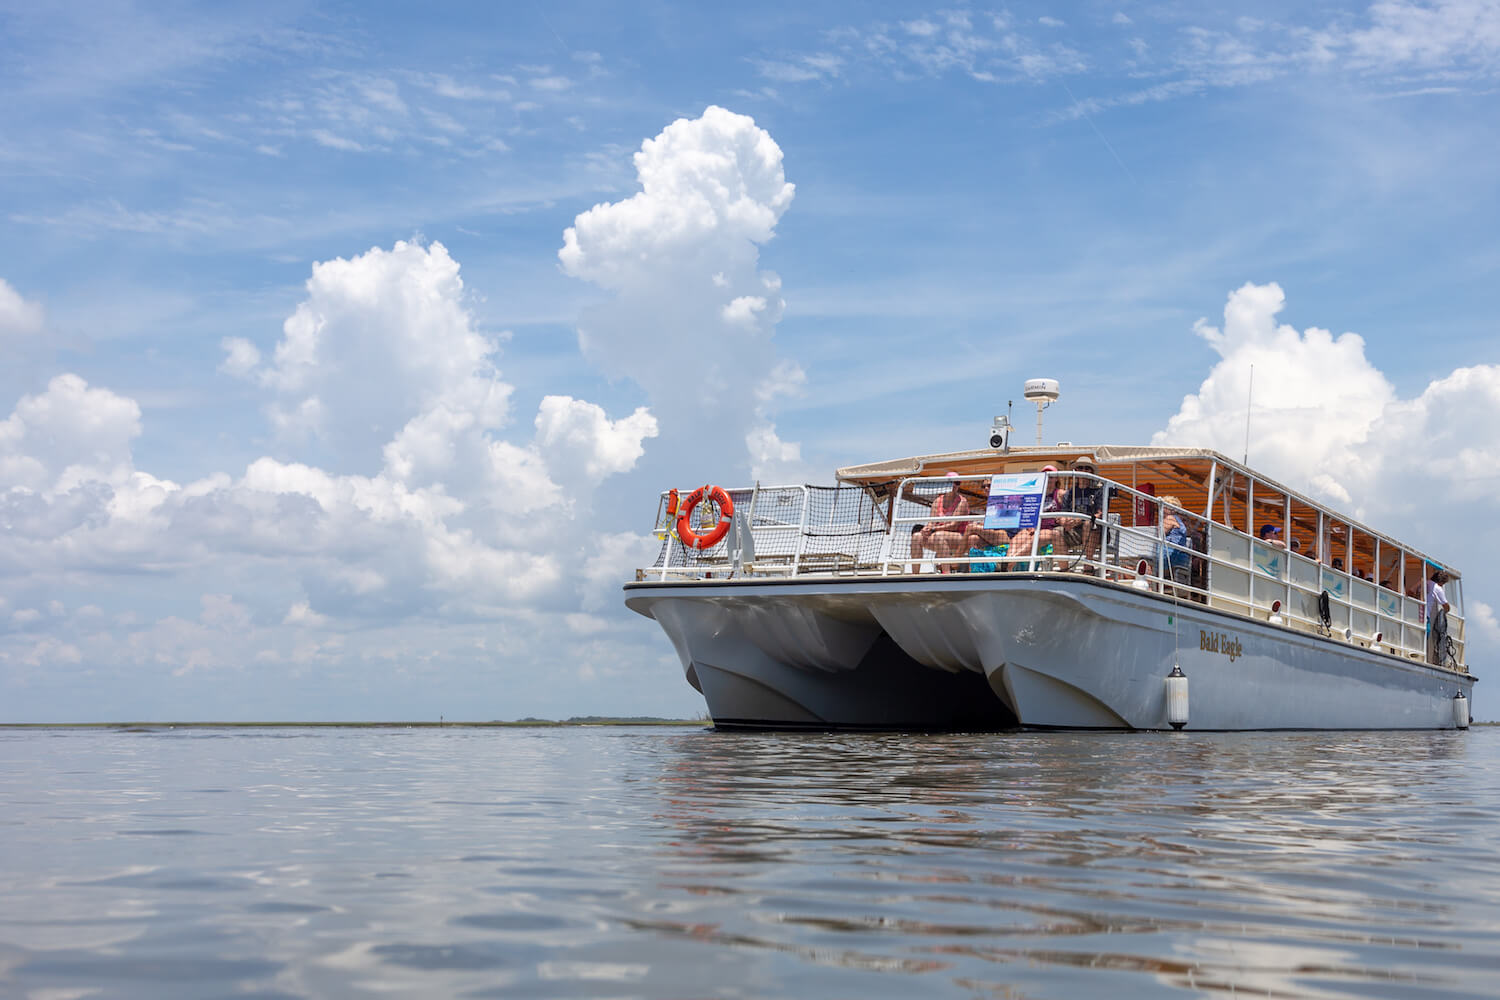 amelia river cruises reviews